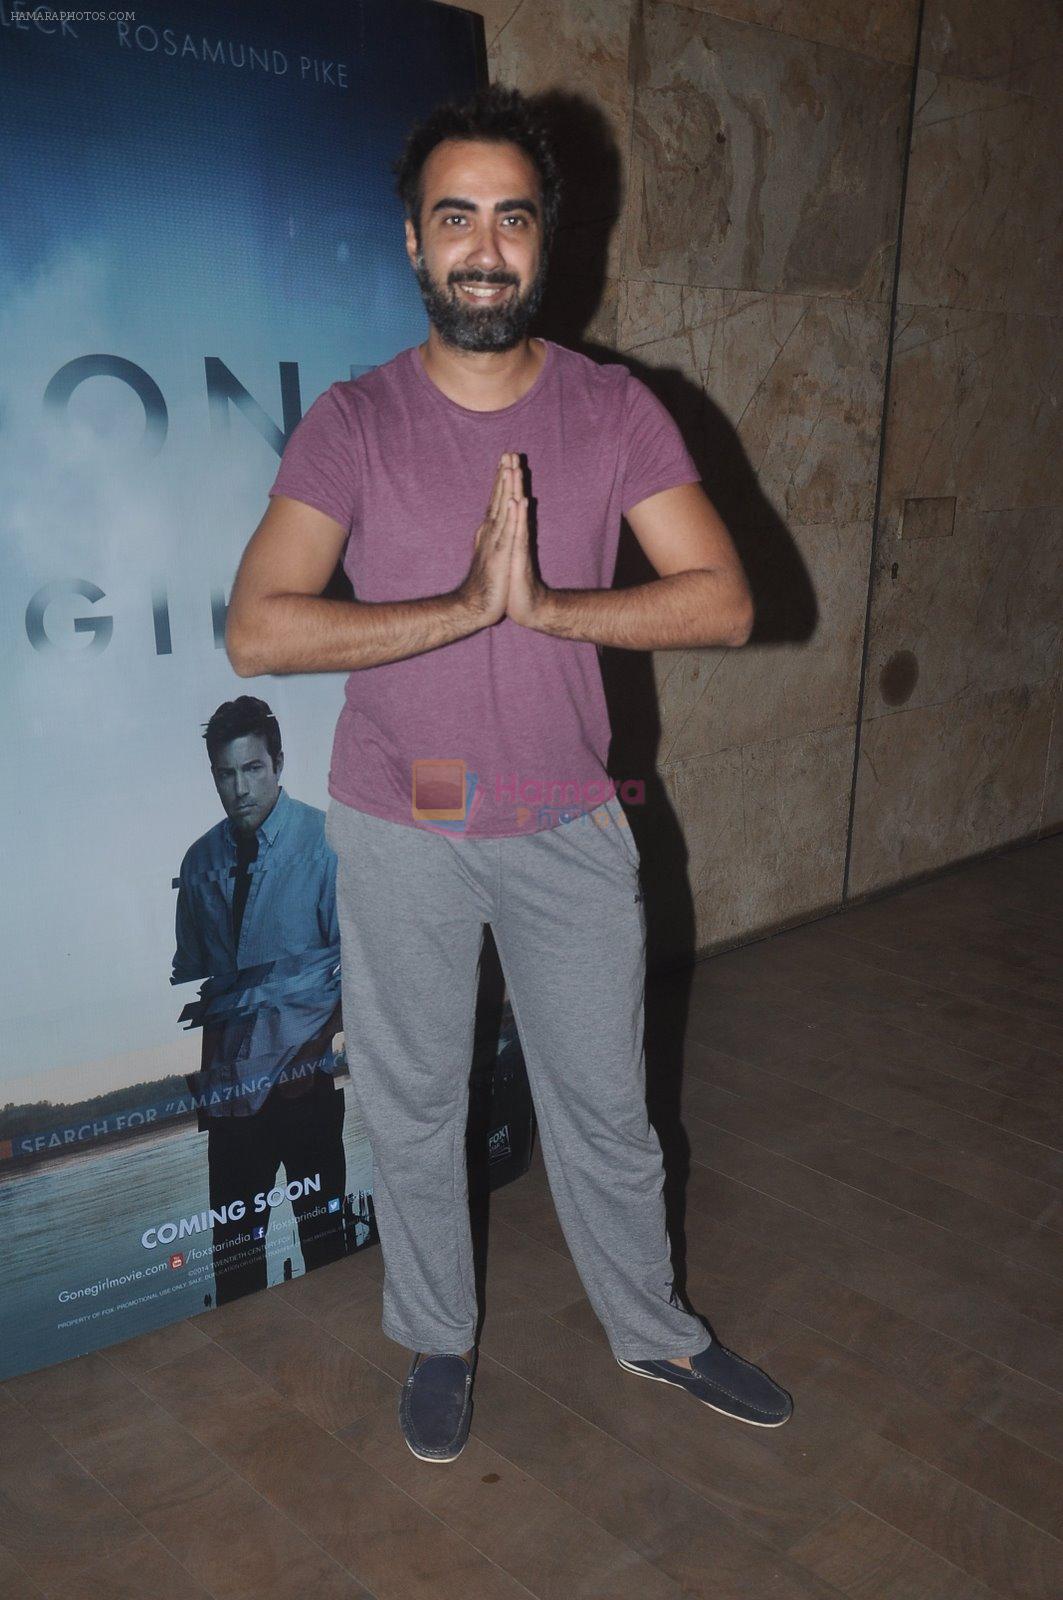 Ranvir Shorey at Gone Girl screening in Lightbox, mumbai on 3rd Nov 2014